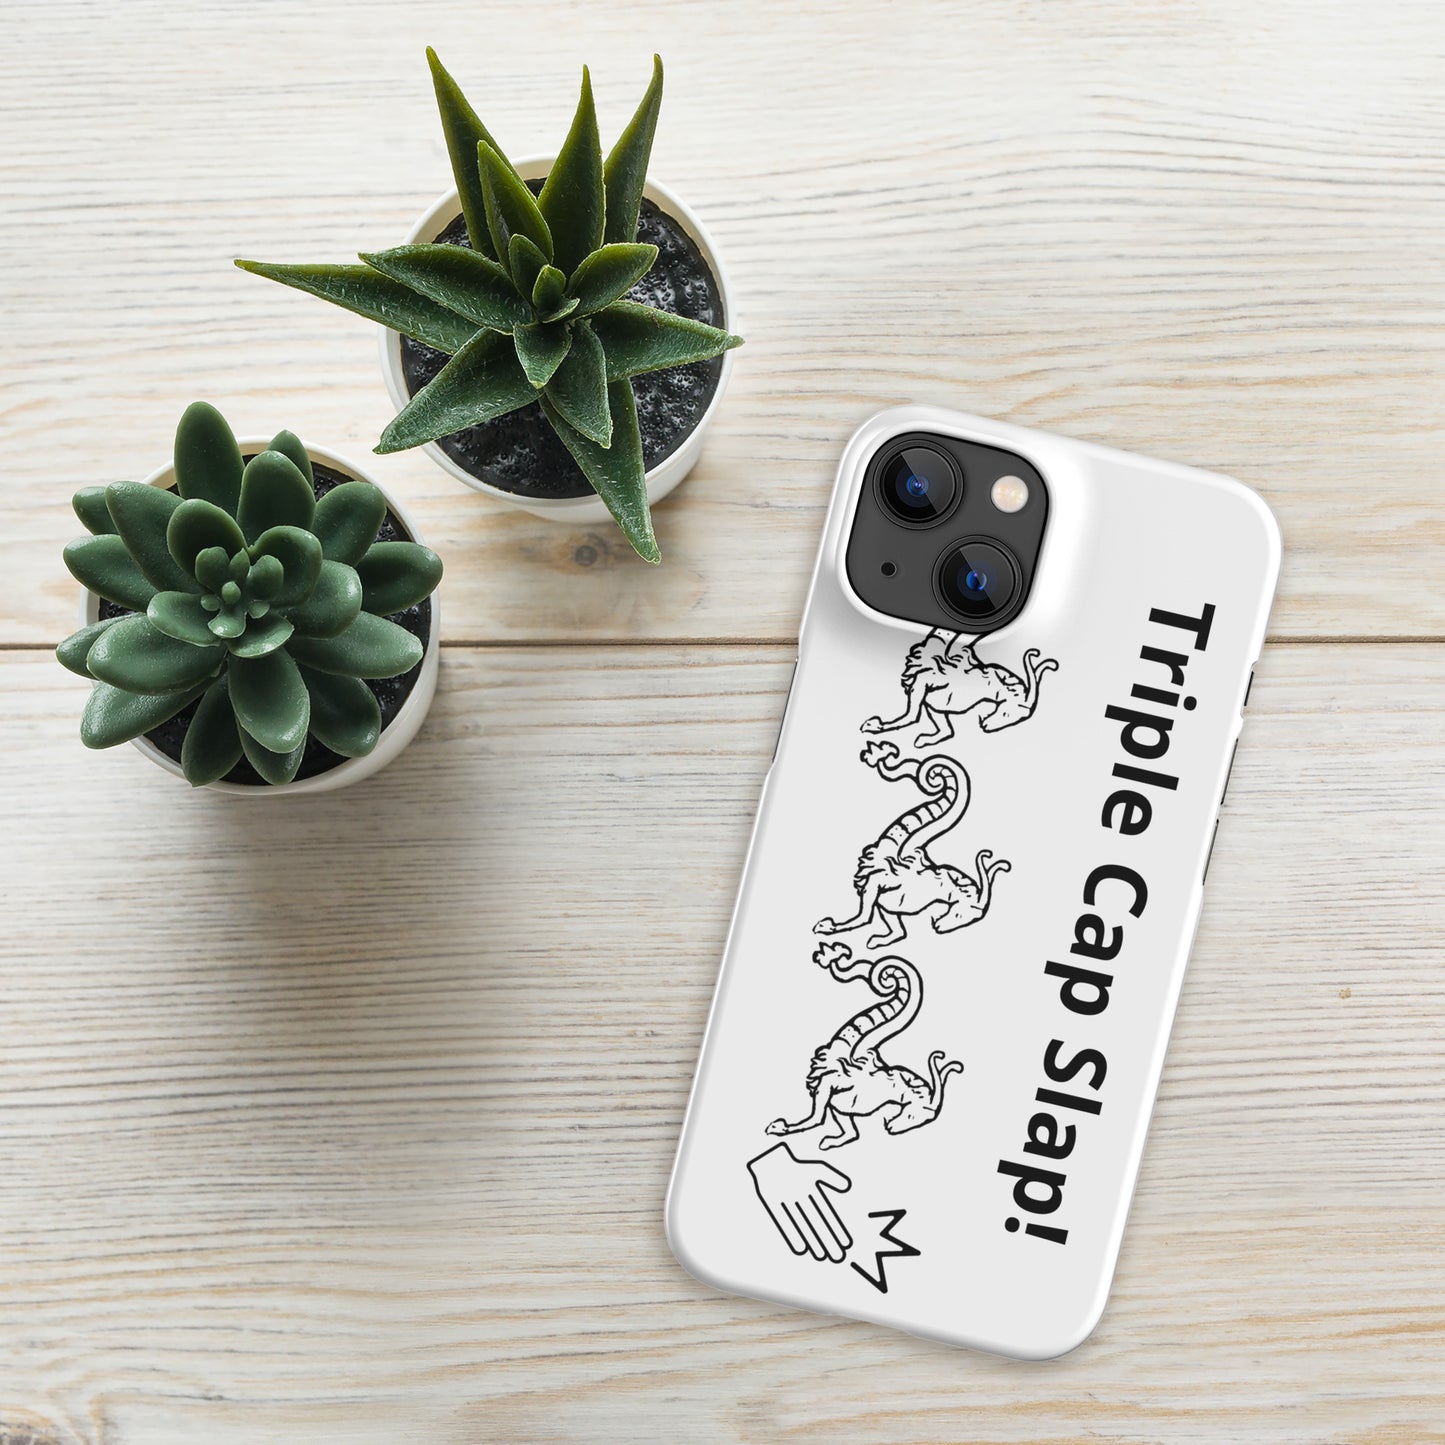 Cap Slap Snap case for iPhone®